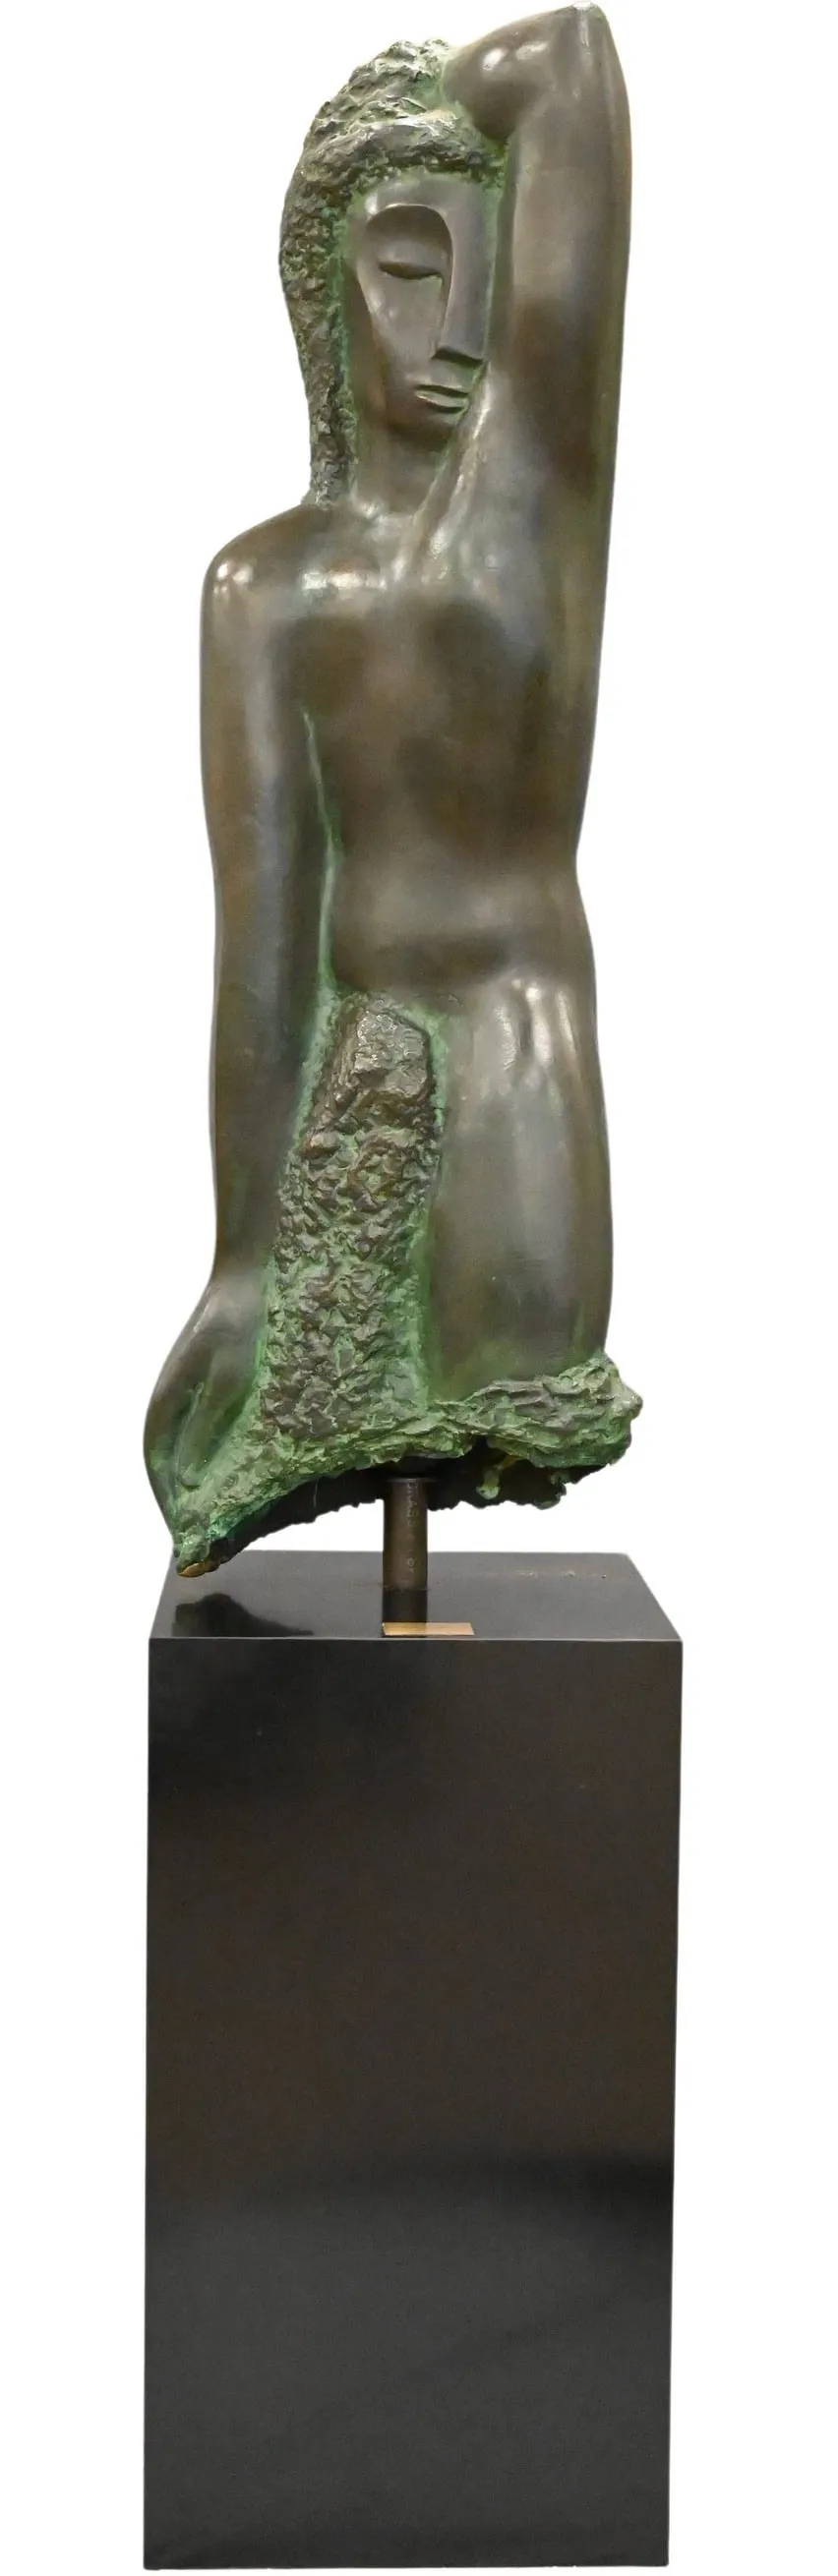 Jose De Creeft's Figure (New Being), is estimated at $15,000-25,000